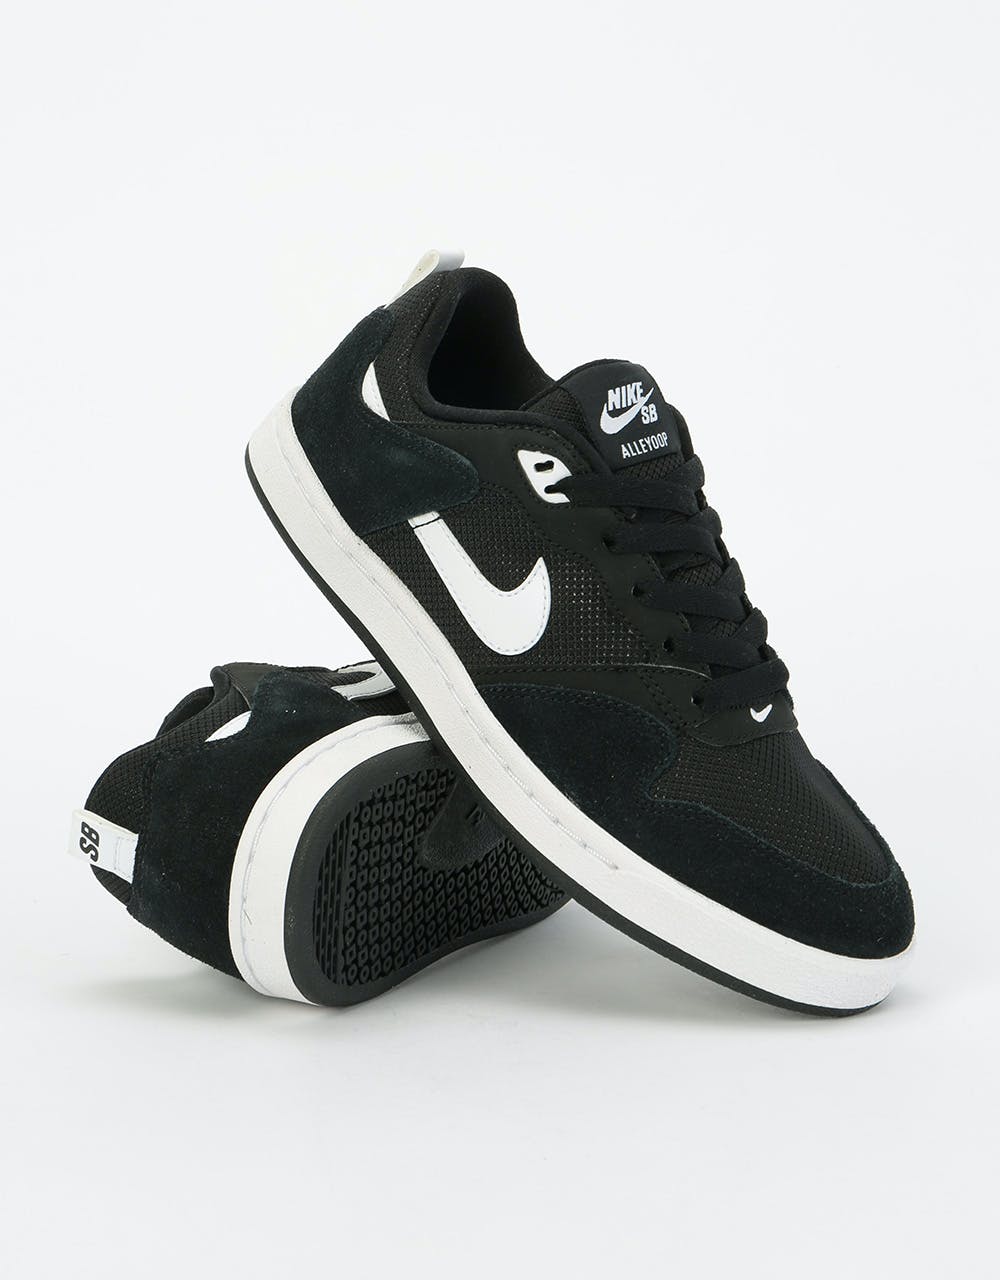 Nike SB Alleyoop Youth Skate Shoes - Black/White/Black